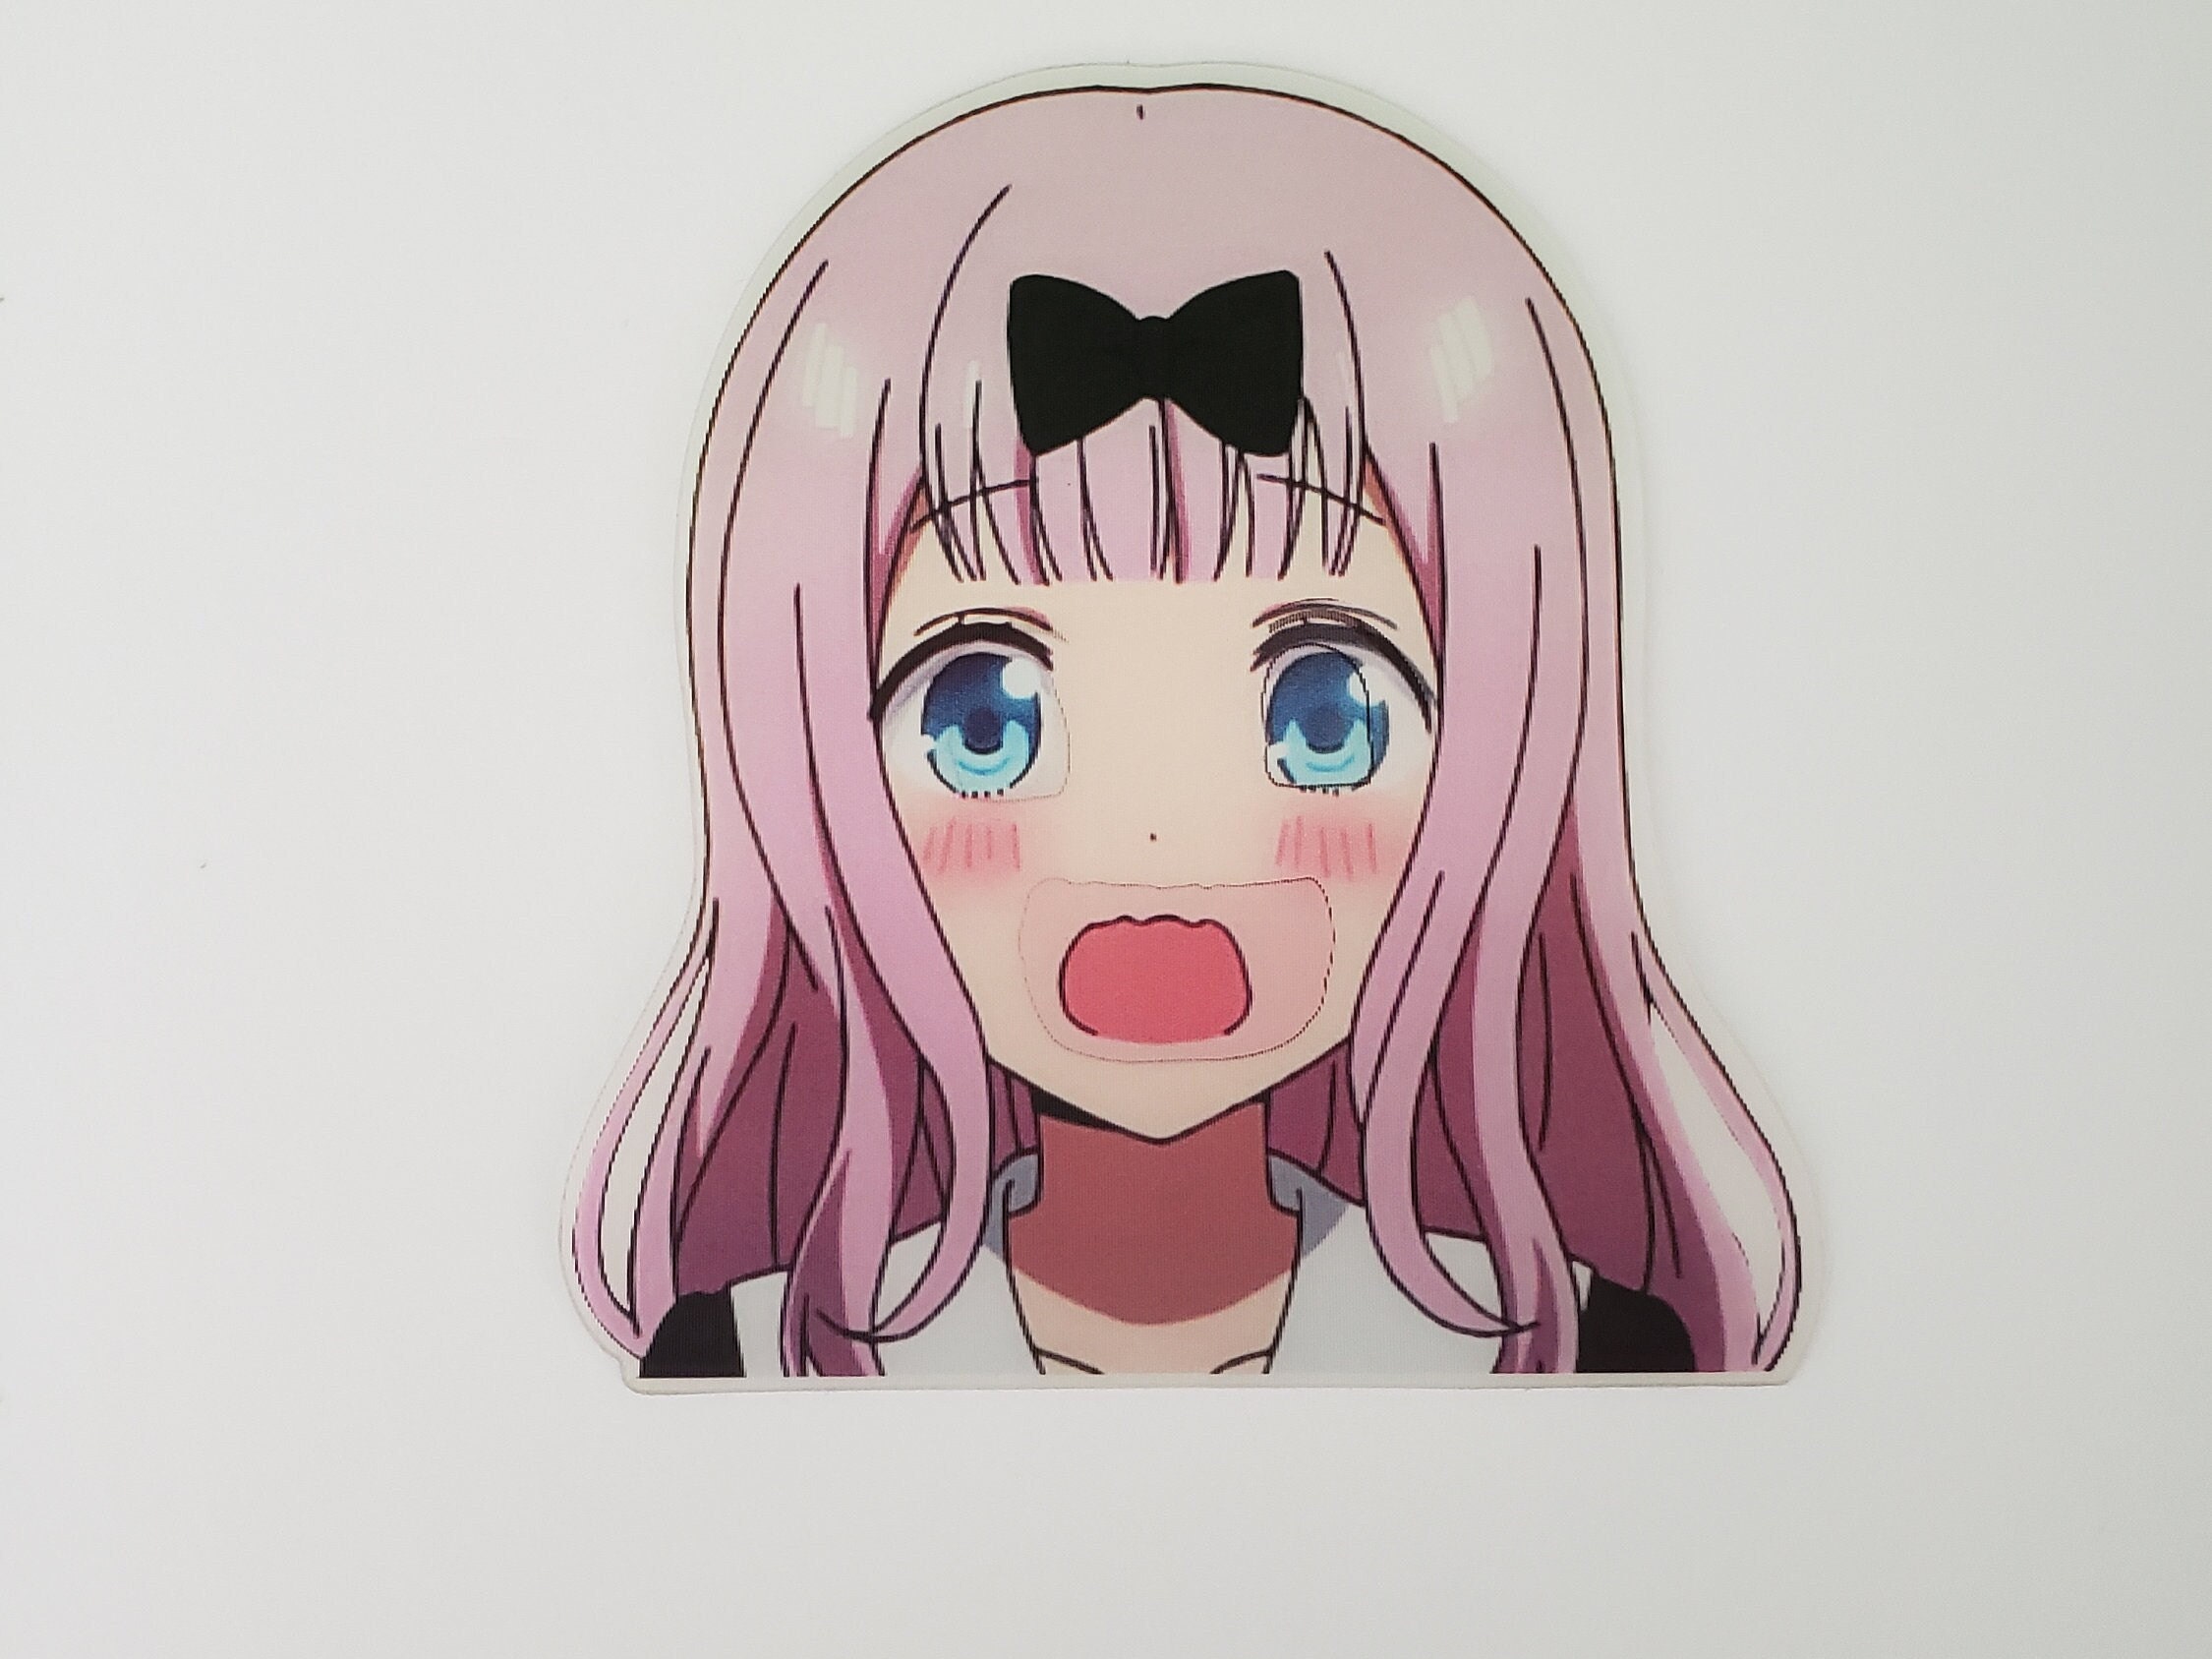 Fujiwara Chika Peeker - Kaguya-Sama  Pin for Sale by Kami-Anime